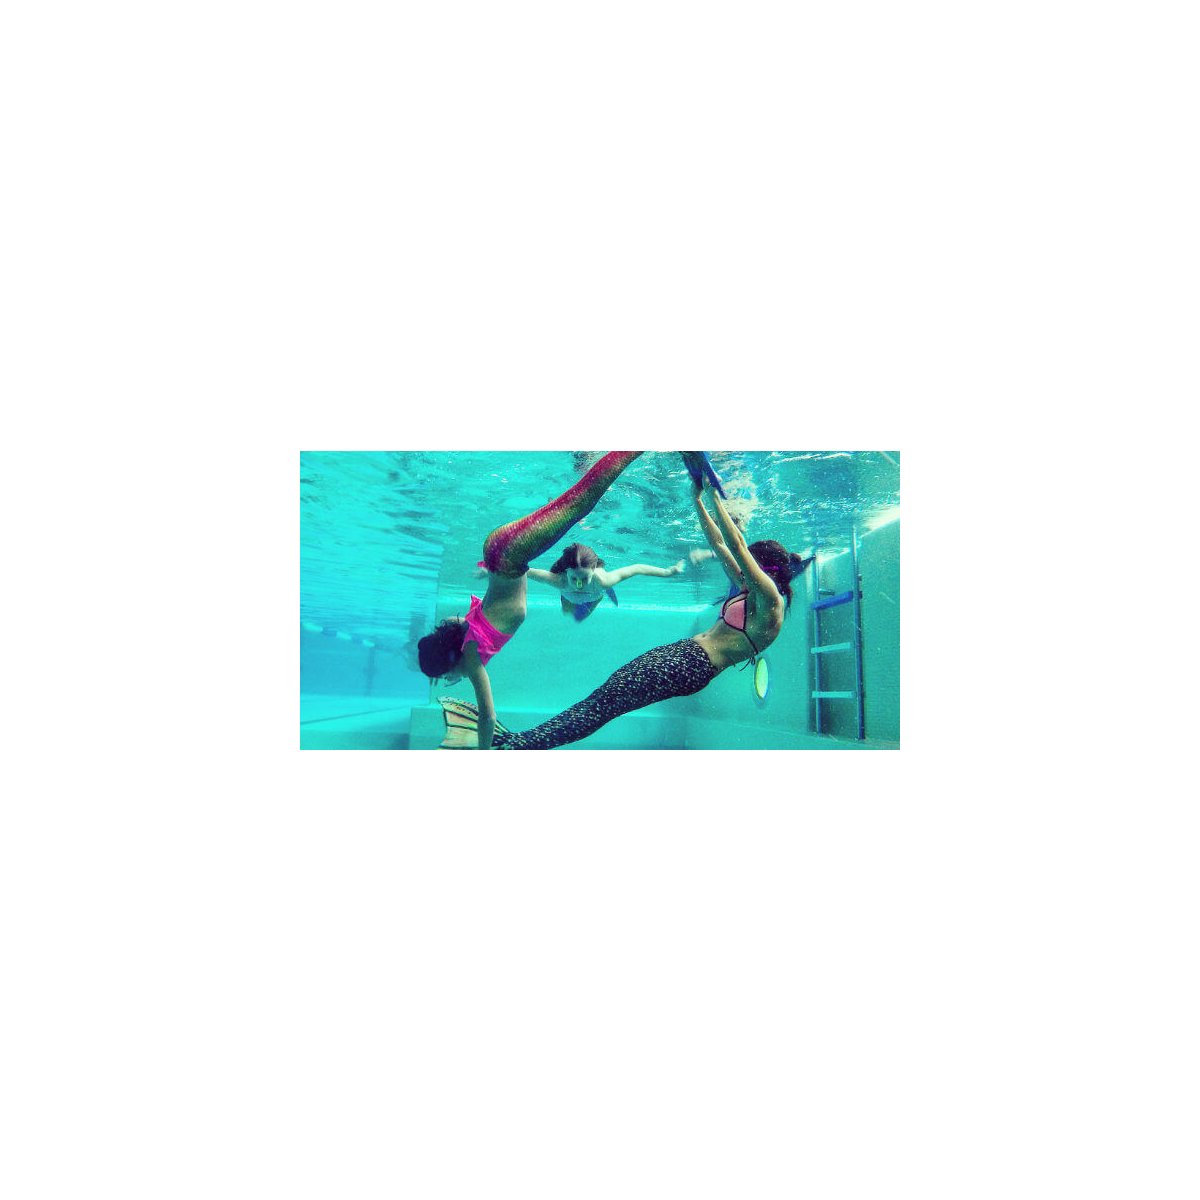 Meerjungfrauen Ausbildung Swimsports - Meerjungfrauen Ausbildung Swimsports